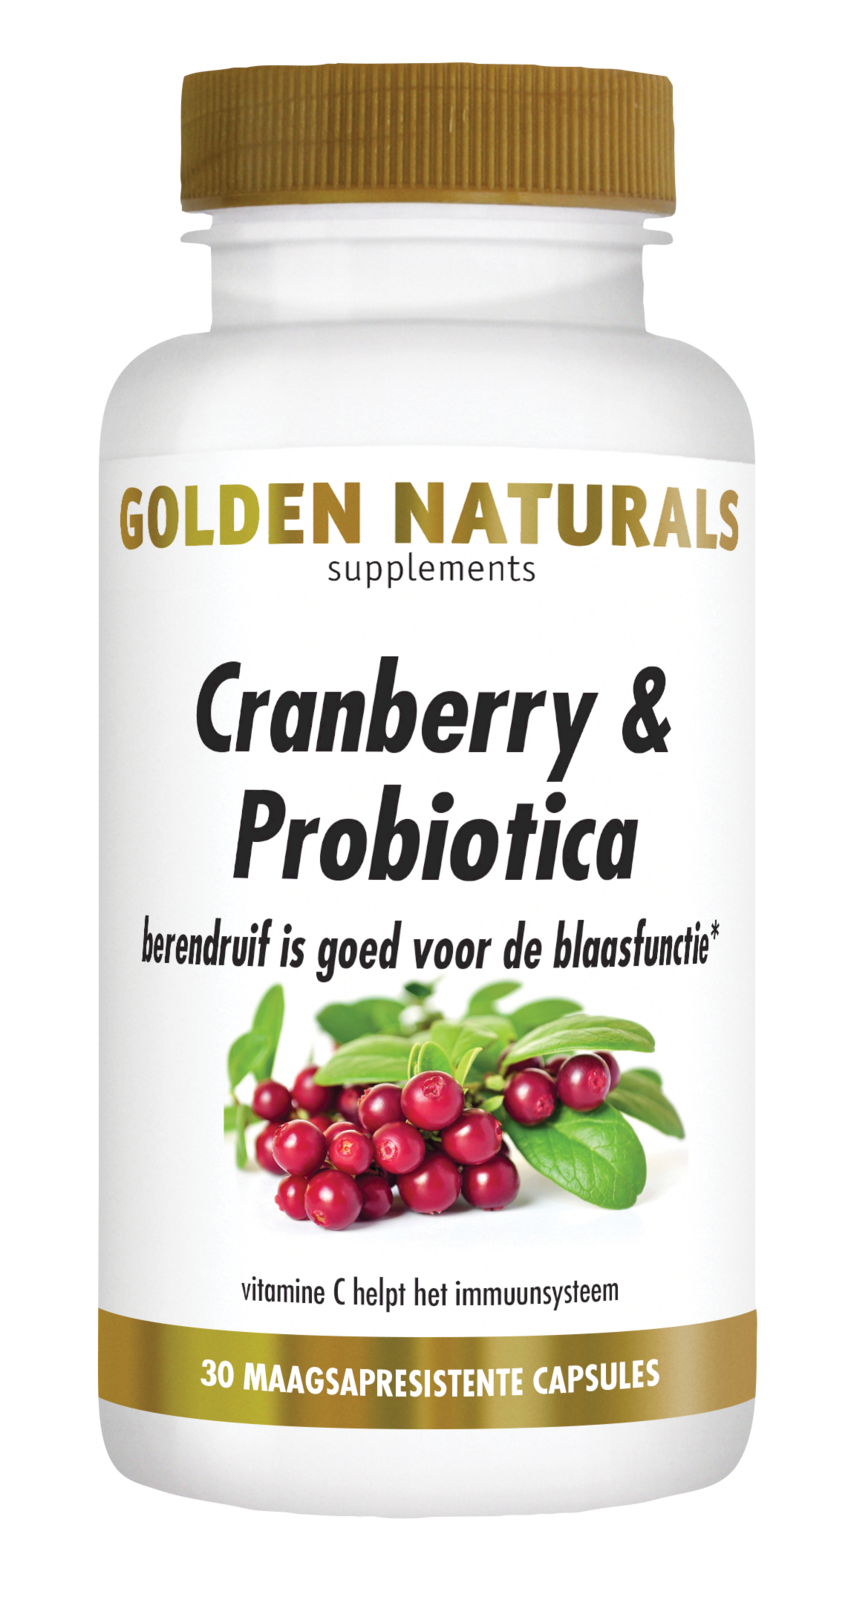 Golden Naturals Cranberry & Probiotica Capsules kopen